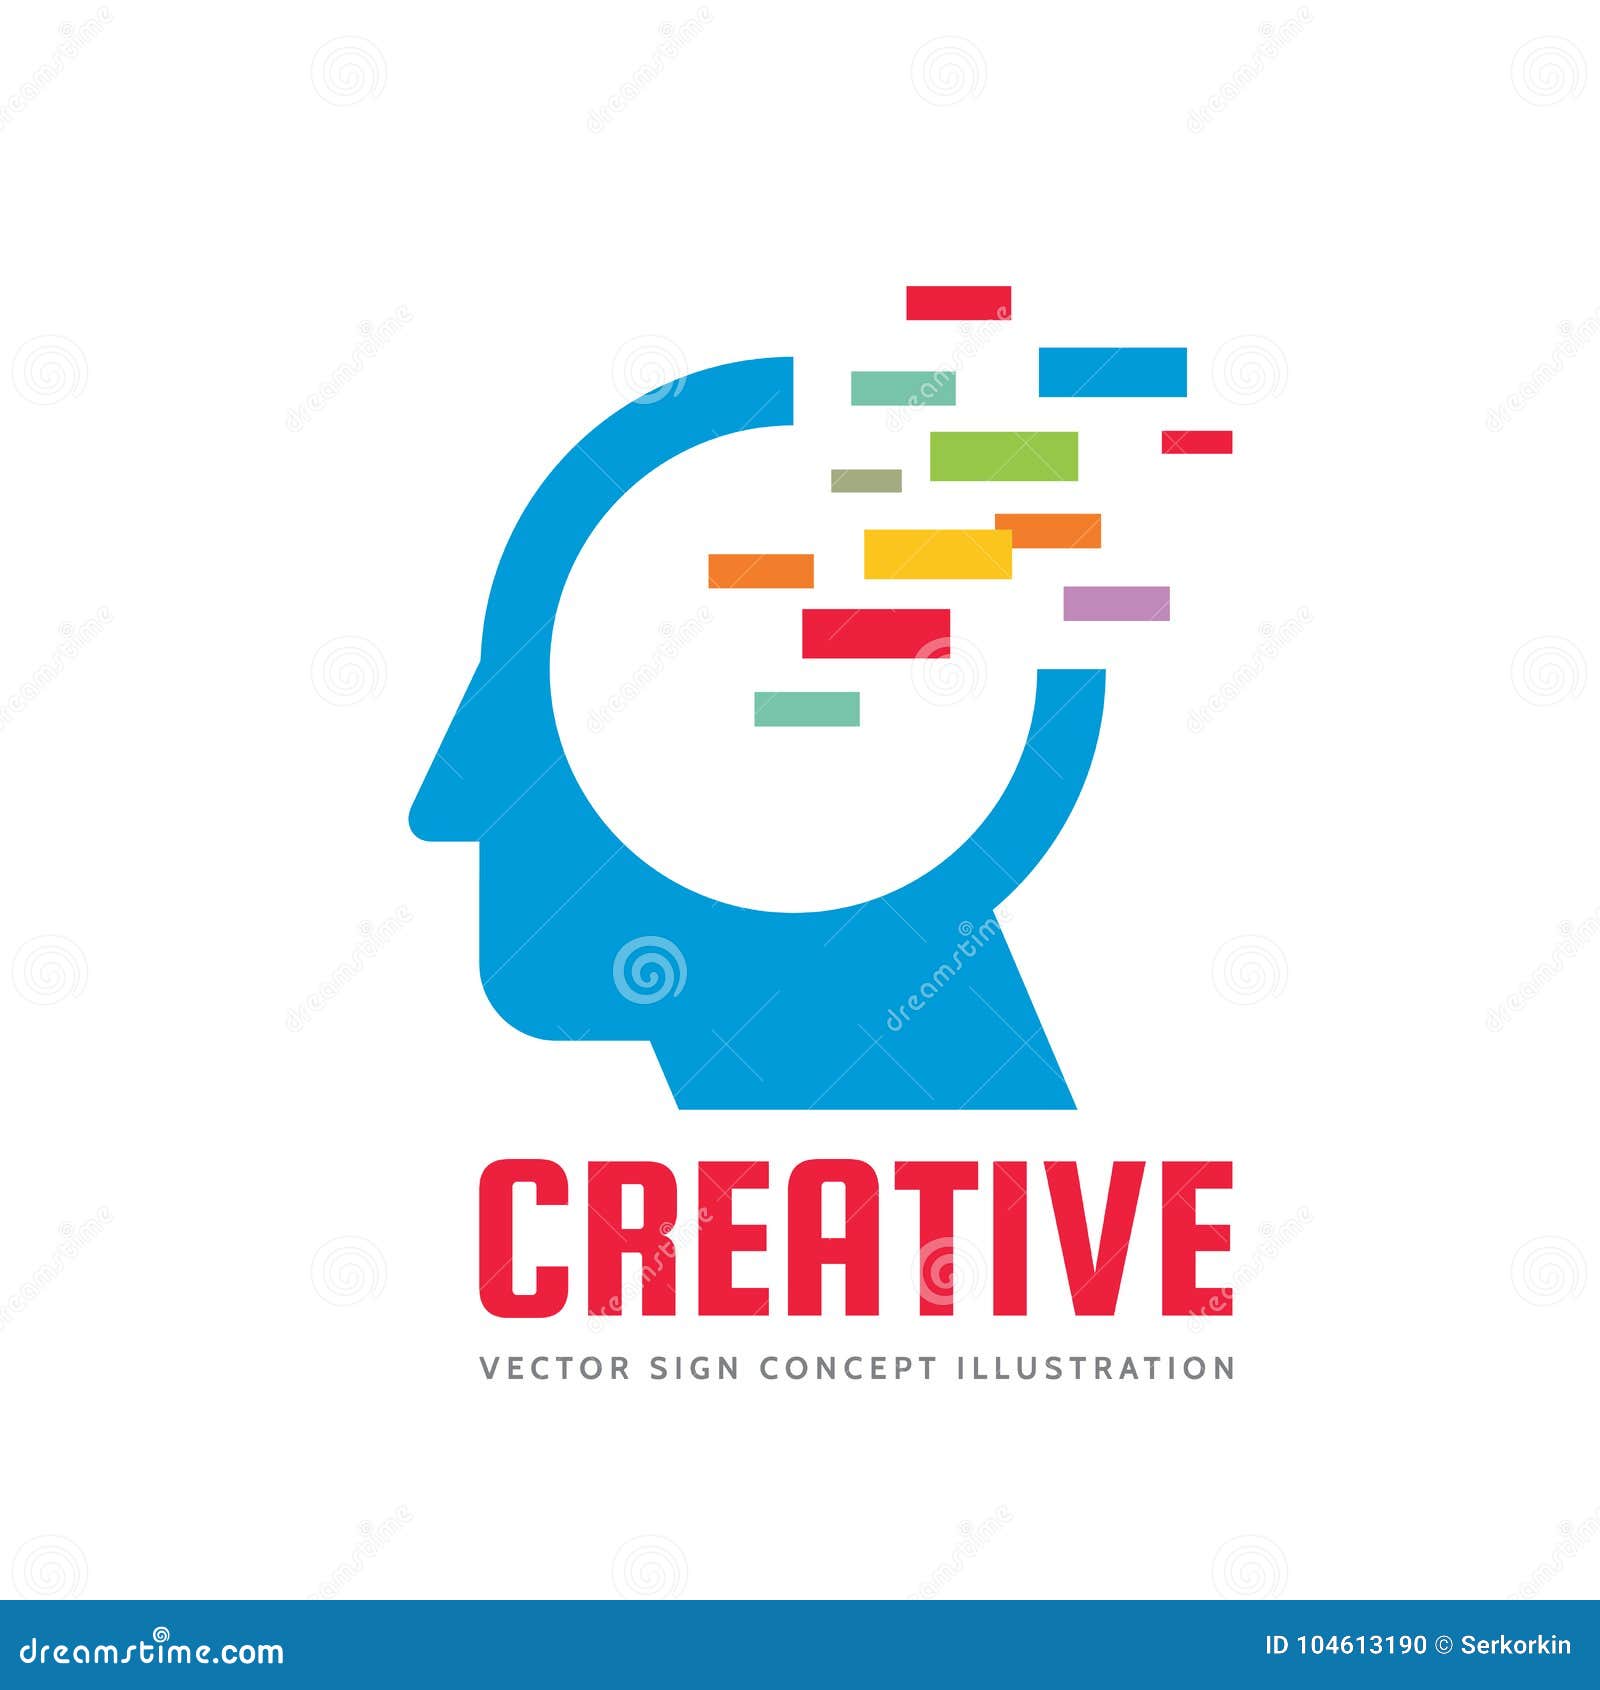 Creative Logo Ideas: Design a Creative Business Logo | Looka